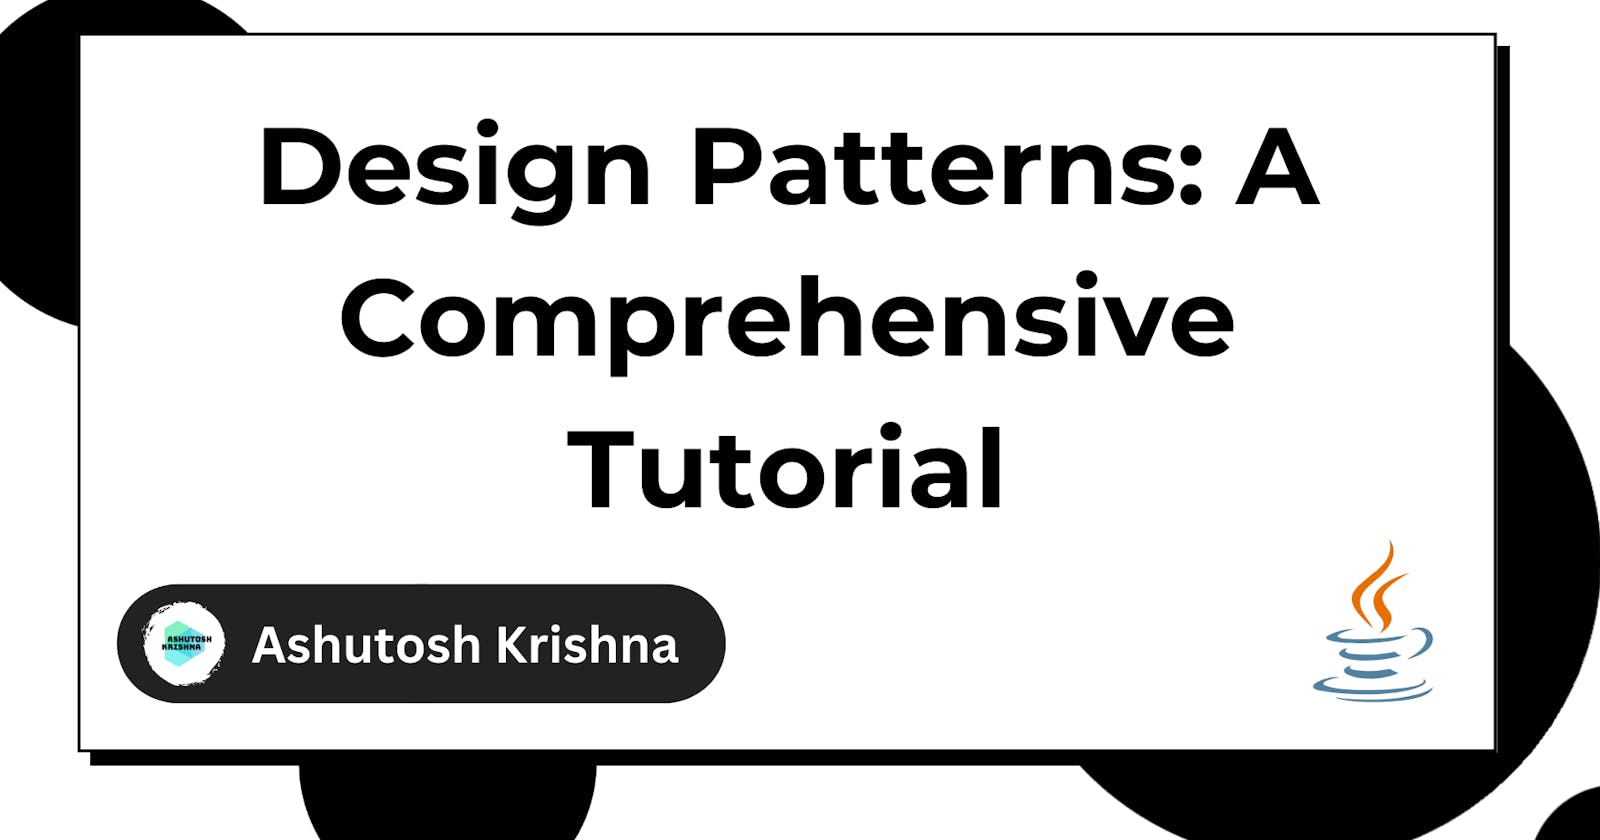 Design Patterns: A Comprehensive Tutorial